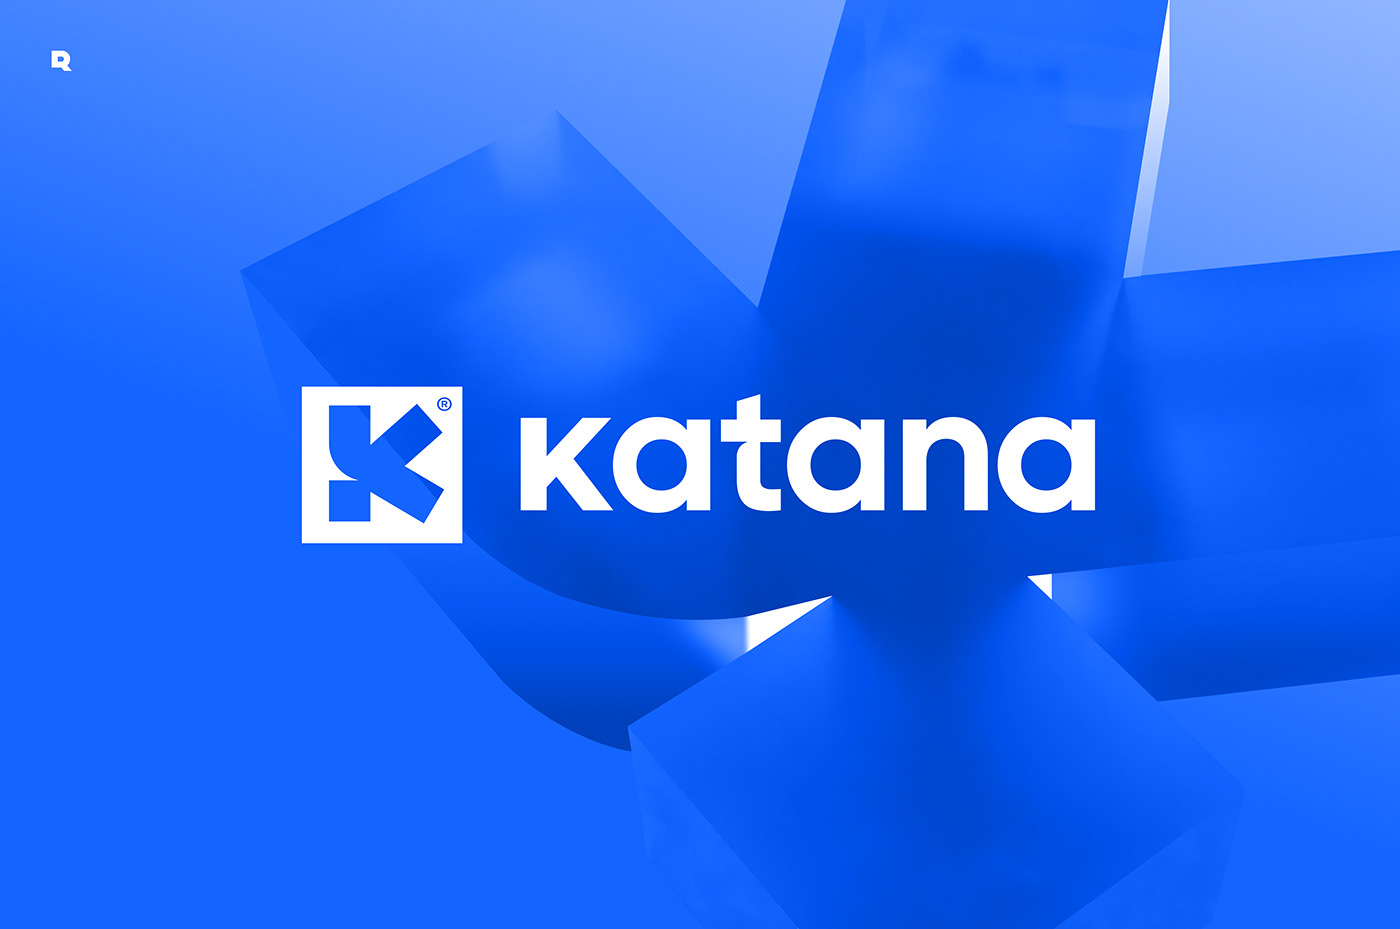 Katana - Branding | UX & UI Design Trial Period